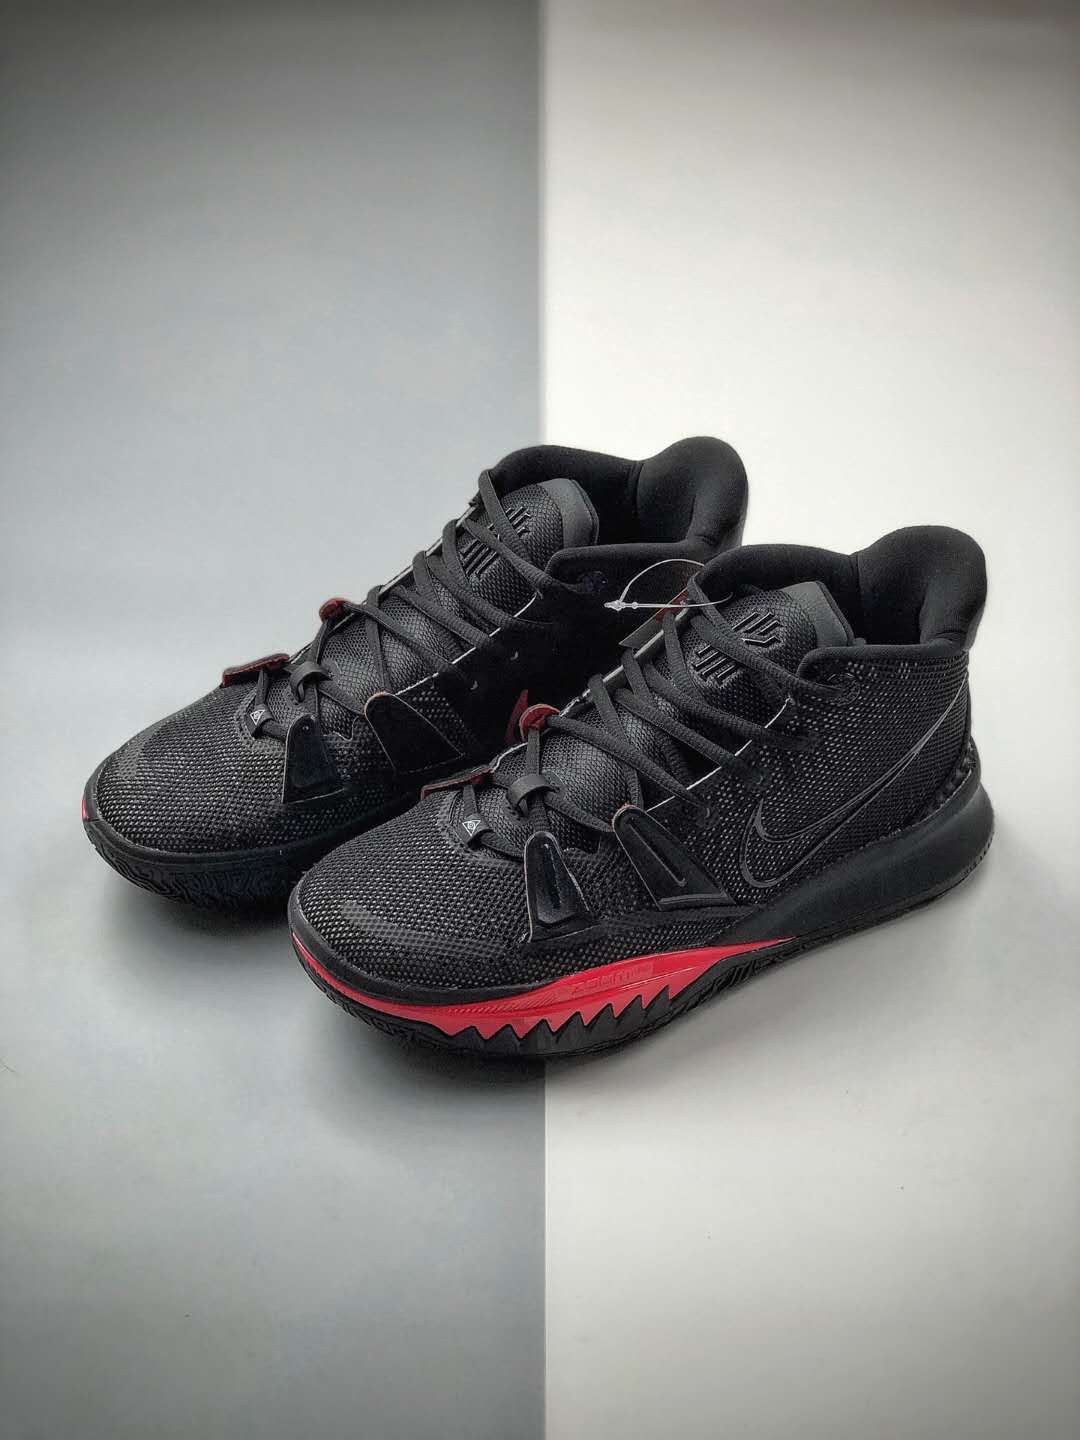 Nike Kyrie 7 EP 'Bred' CQ9327-001 - Stylish & High-Performance Basketball Shoes